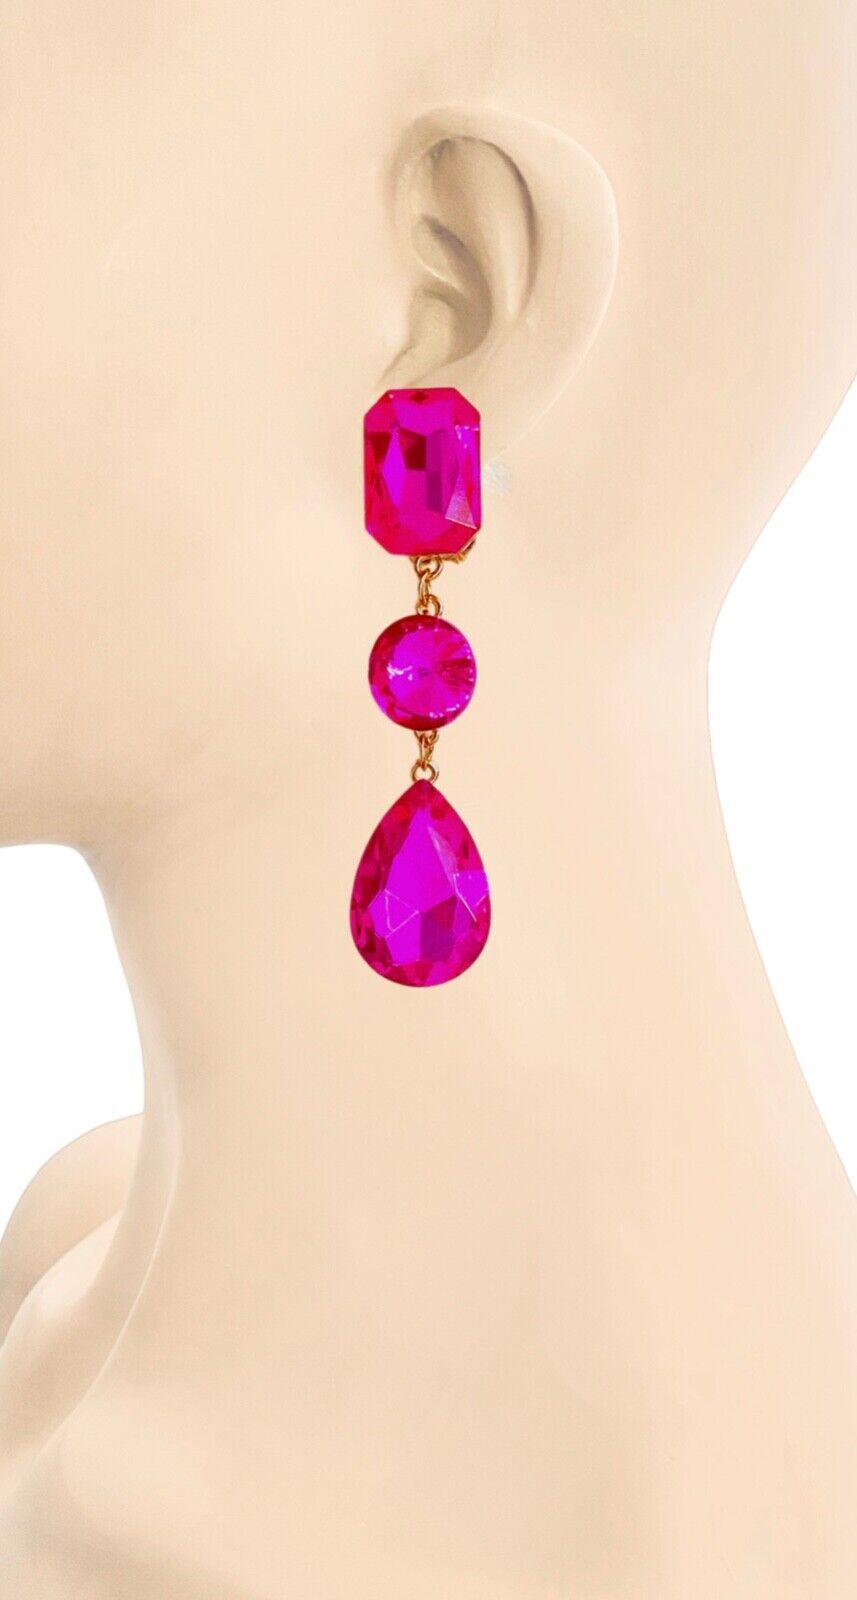 3 Long Classic Elegant Linear Clip On Fuchsia Hot Pink Crystal